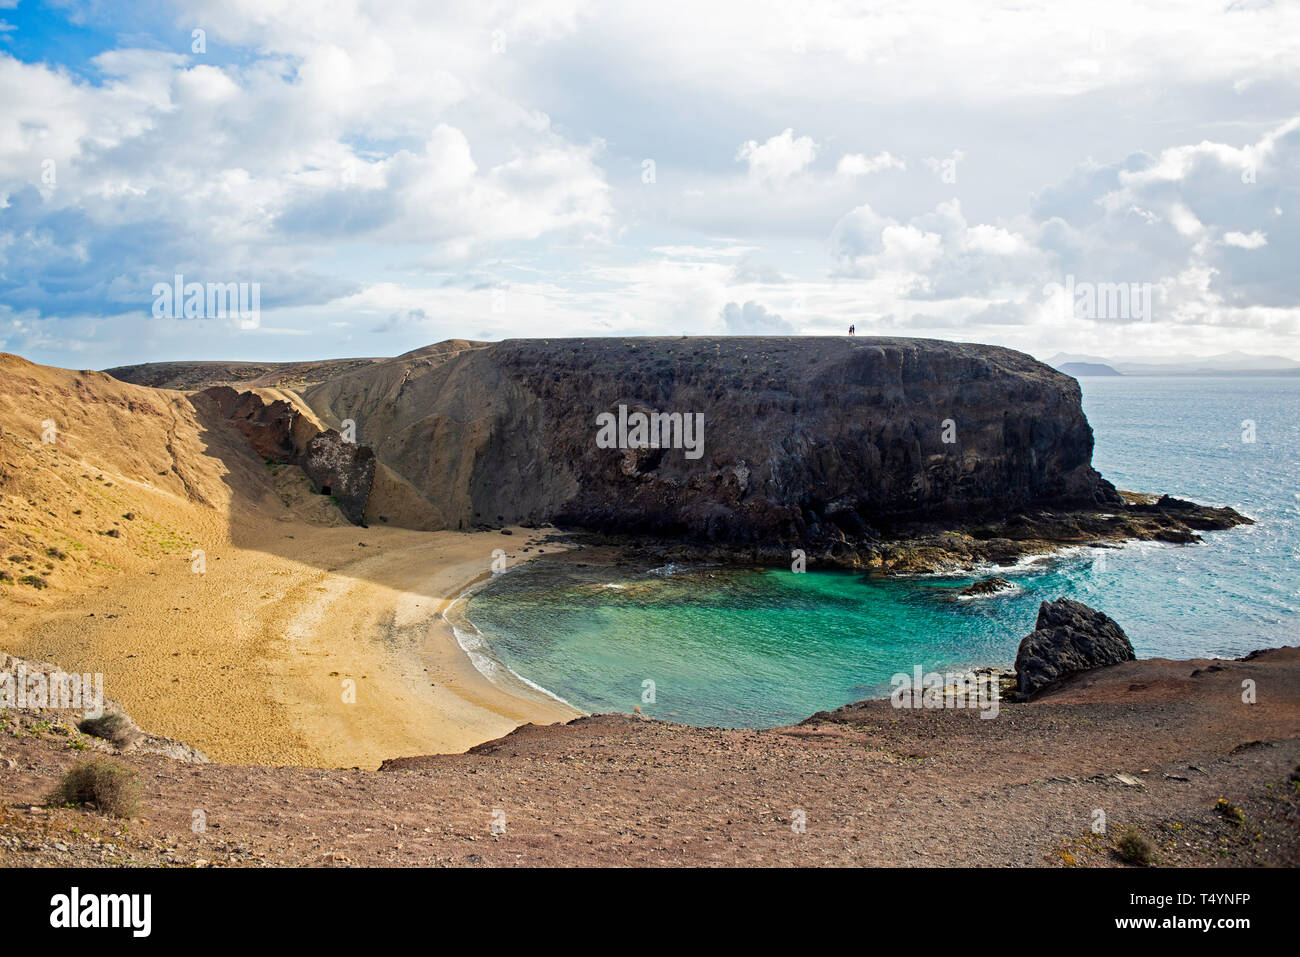 The beautiful Papagayo beach on a sunny day, island of Lanzarote, Canary islands, Spain Stock Photo